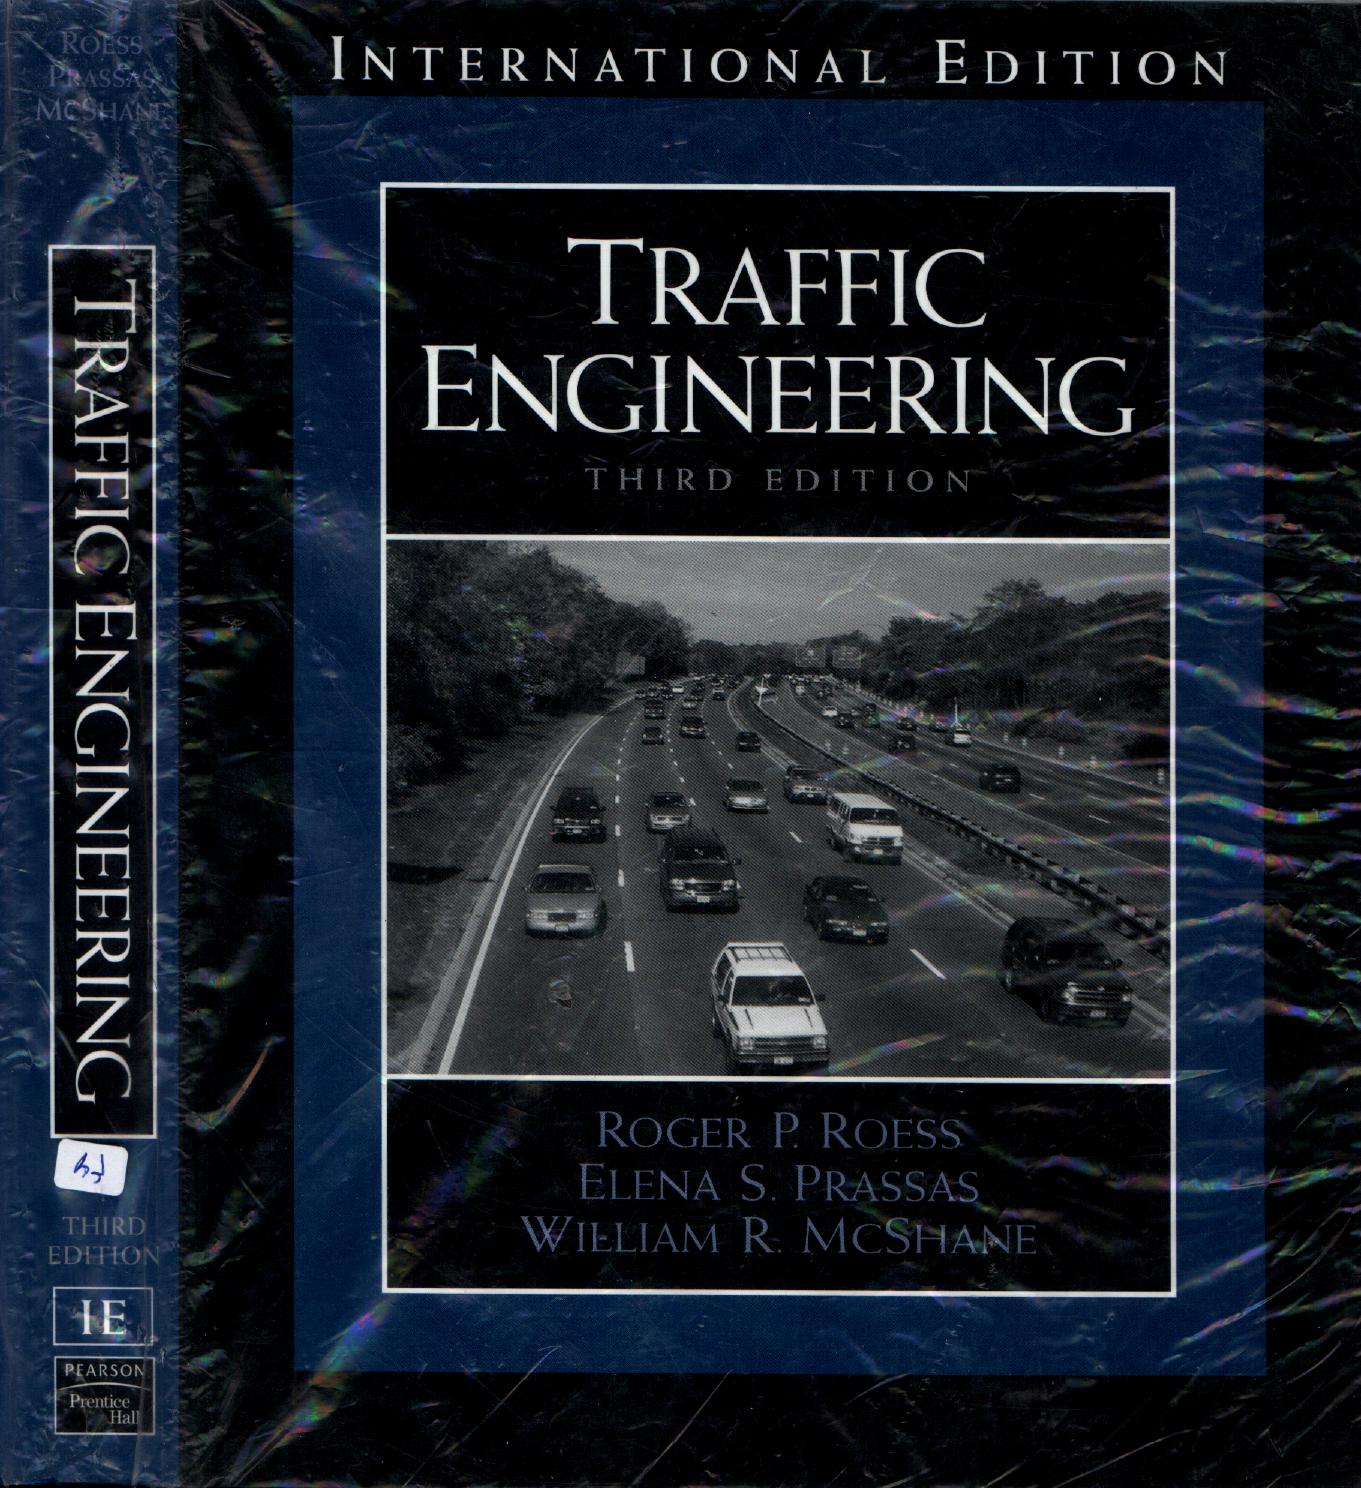 Traffic engineering